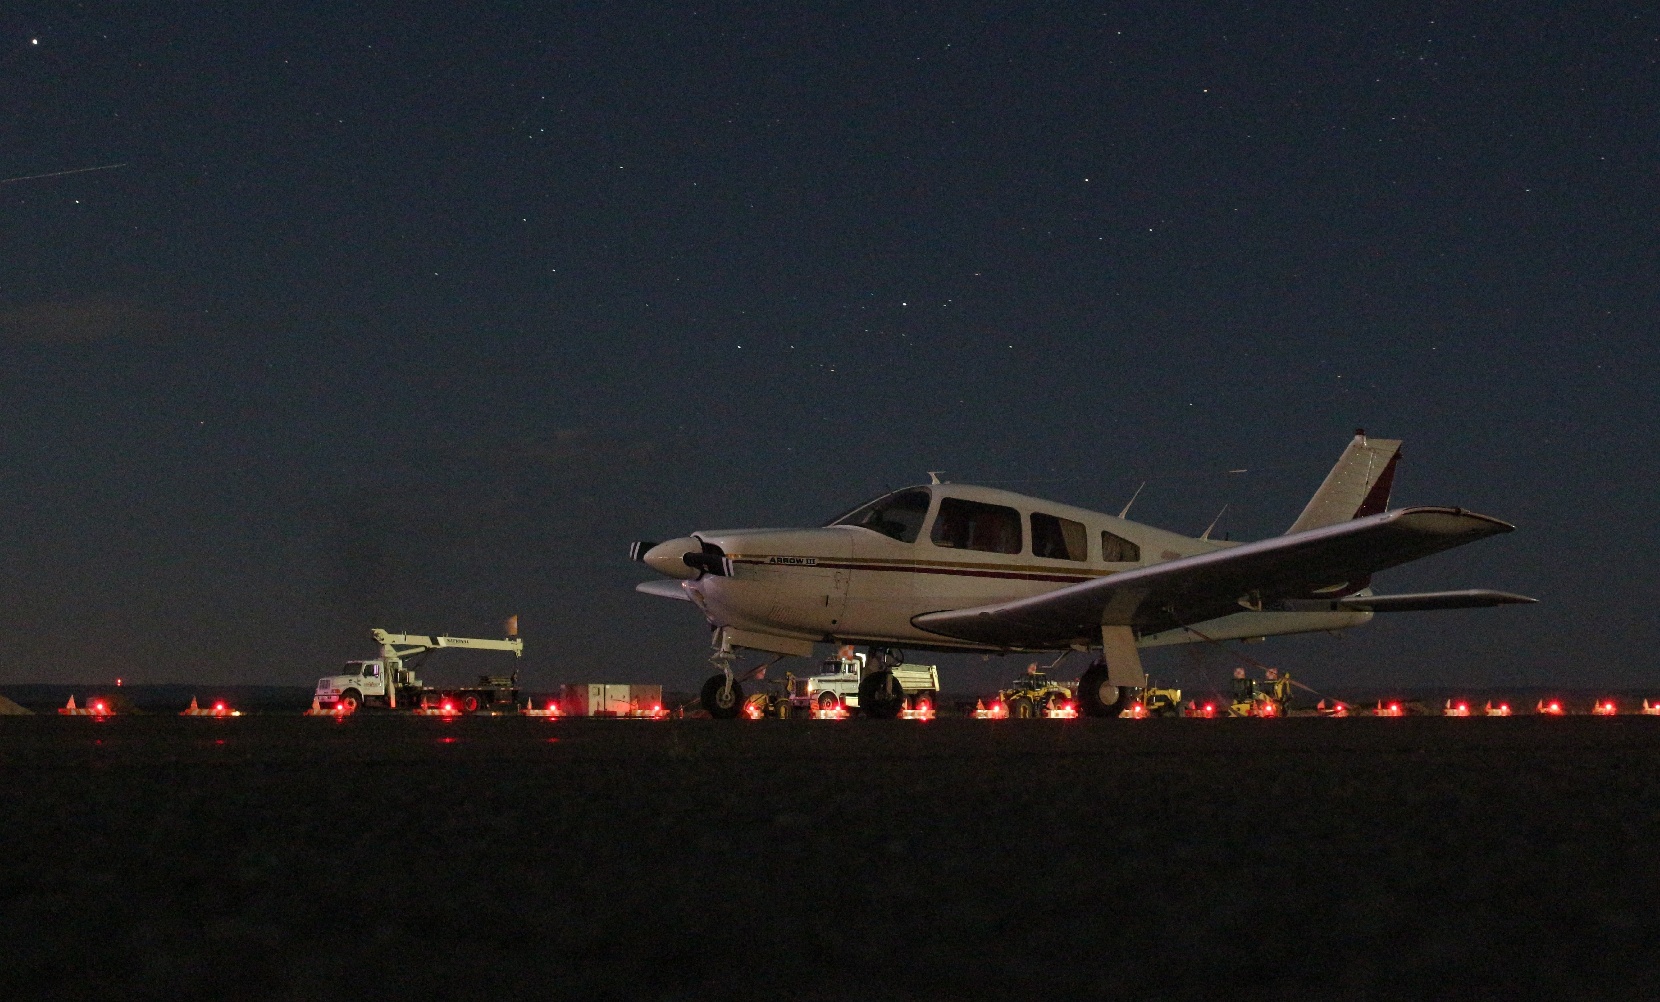 GA airplane on the tarmac at night